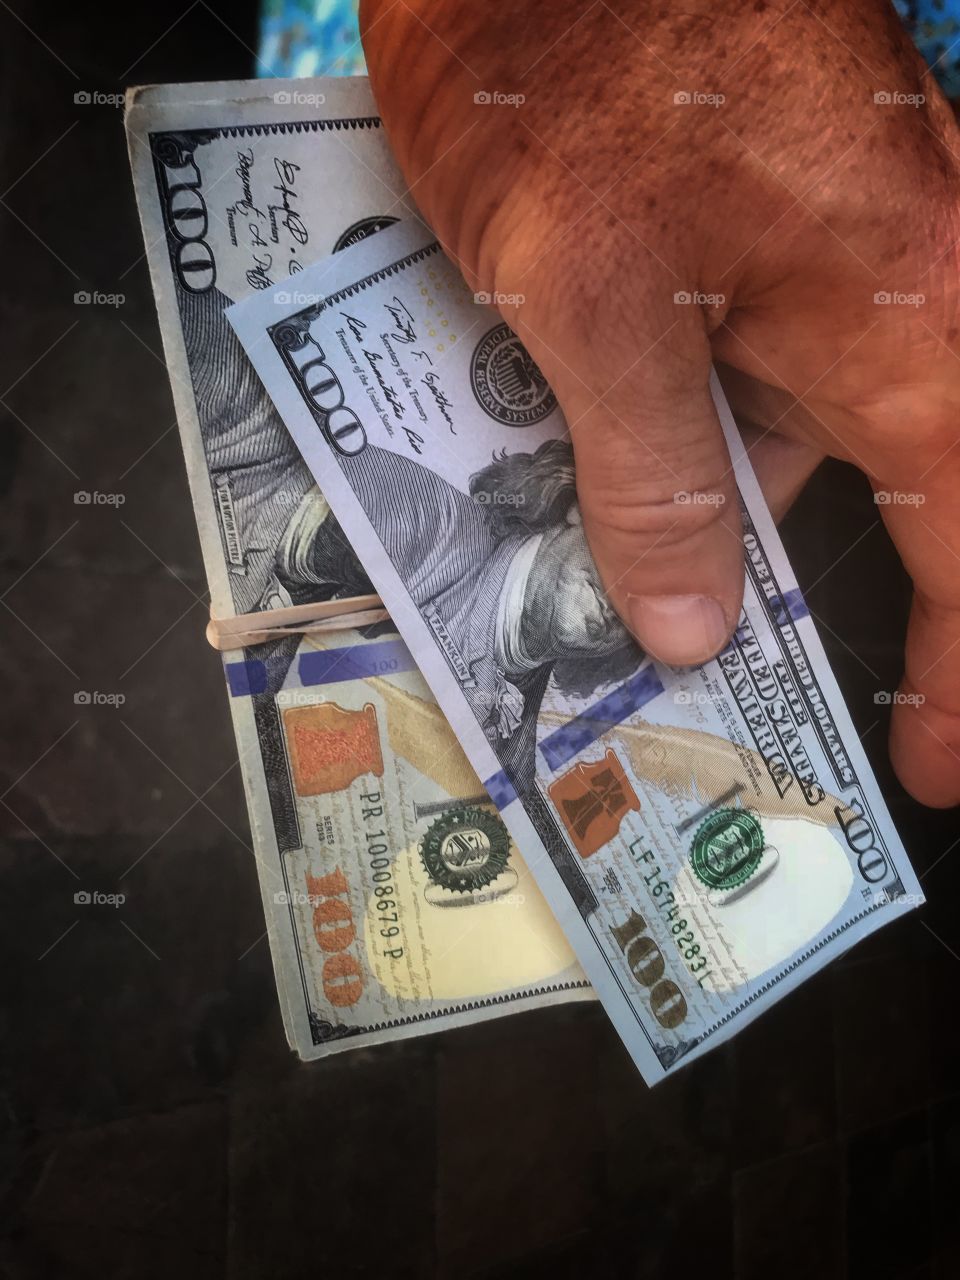 A hand holding several crisp new one hundred dollar bills